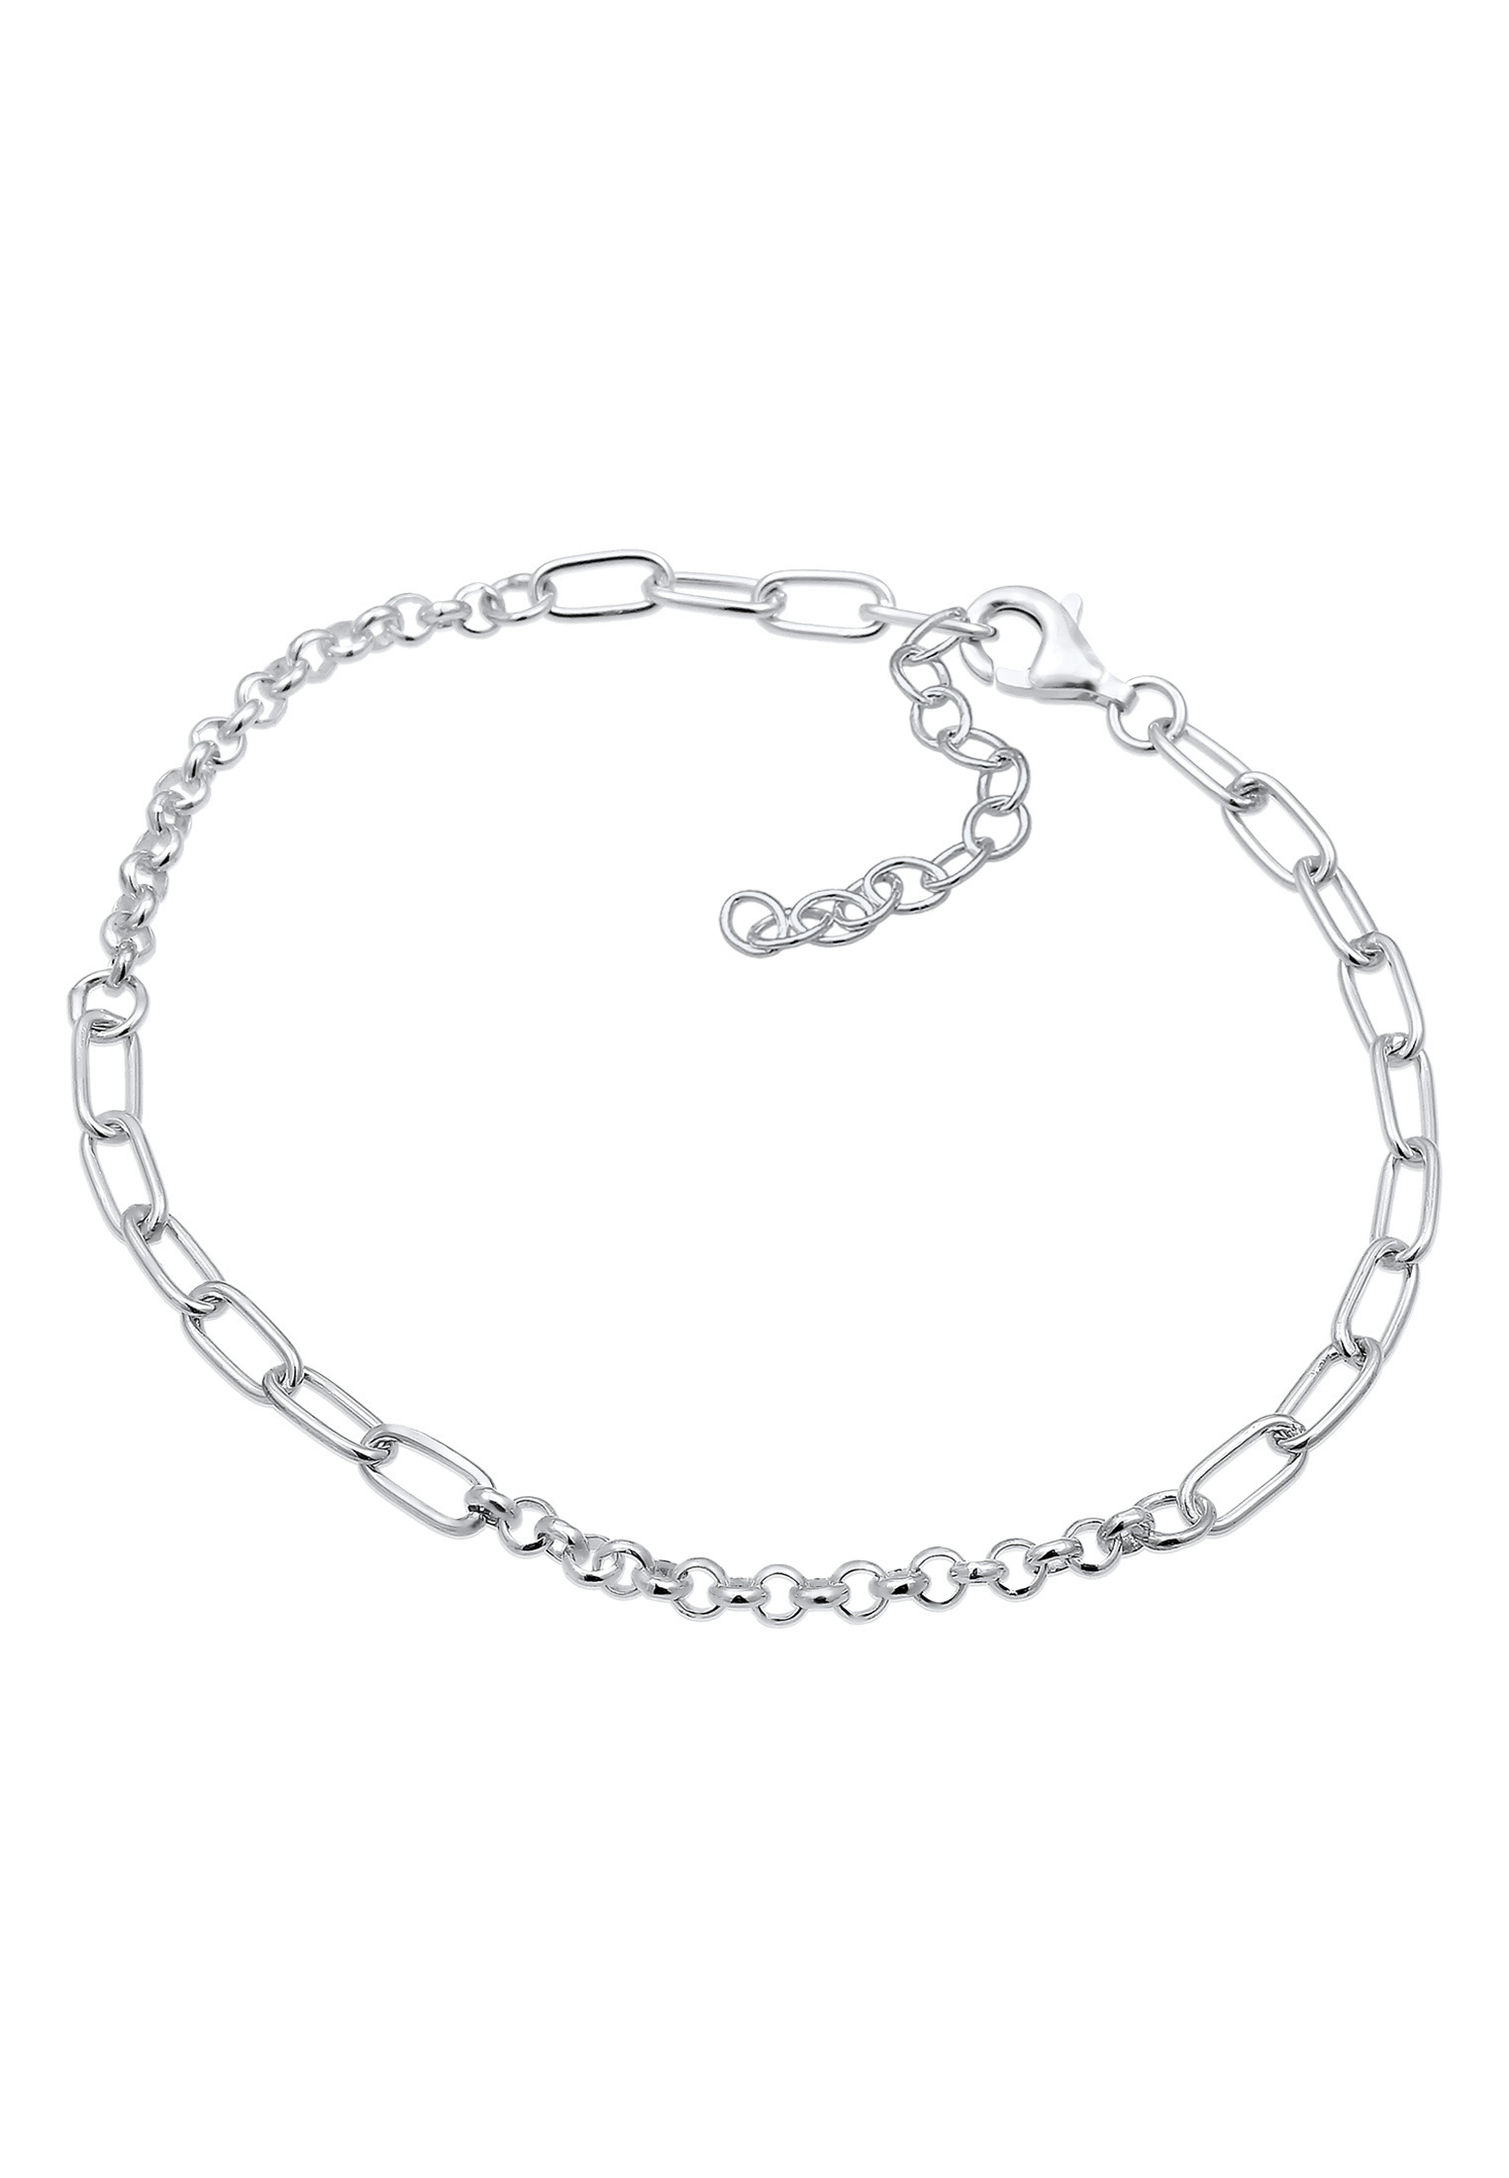 Nenalina Armband Charmträger Bettelarmband Trend Basic 925 Silber Farbe:  Silber, Größe: 18 cm | Weltbild.de